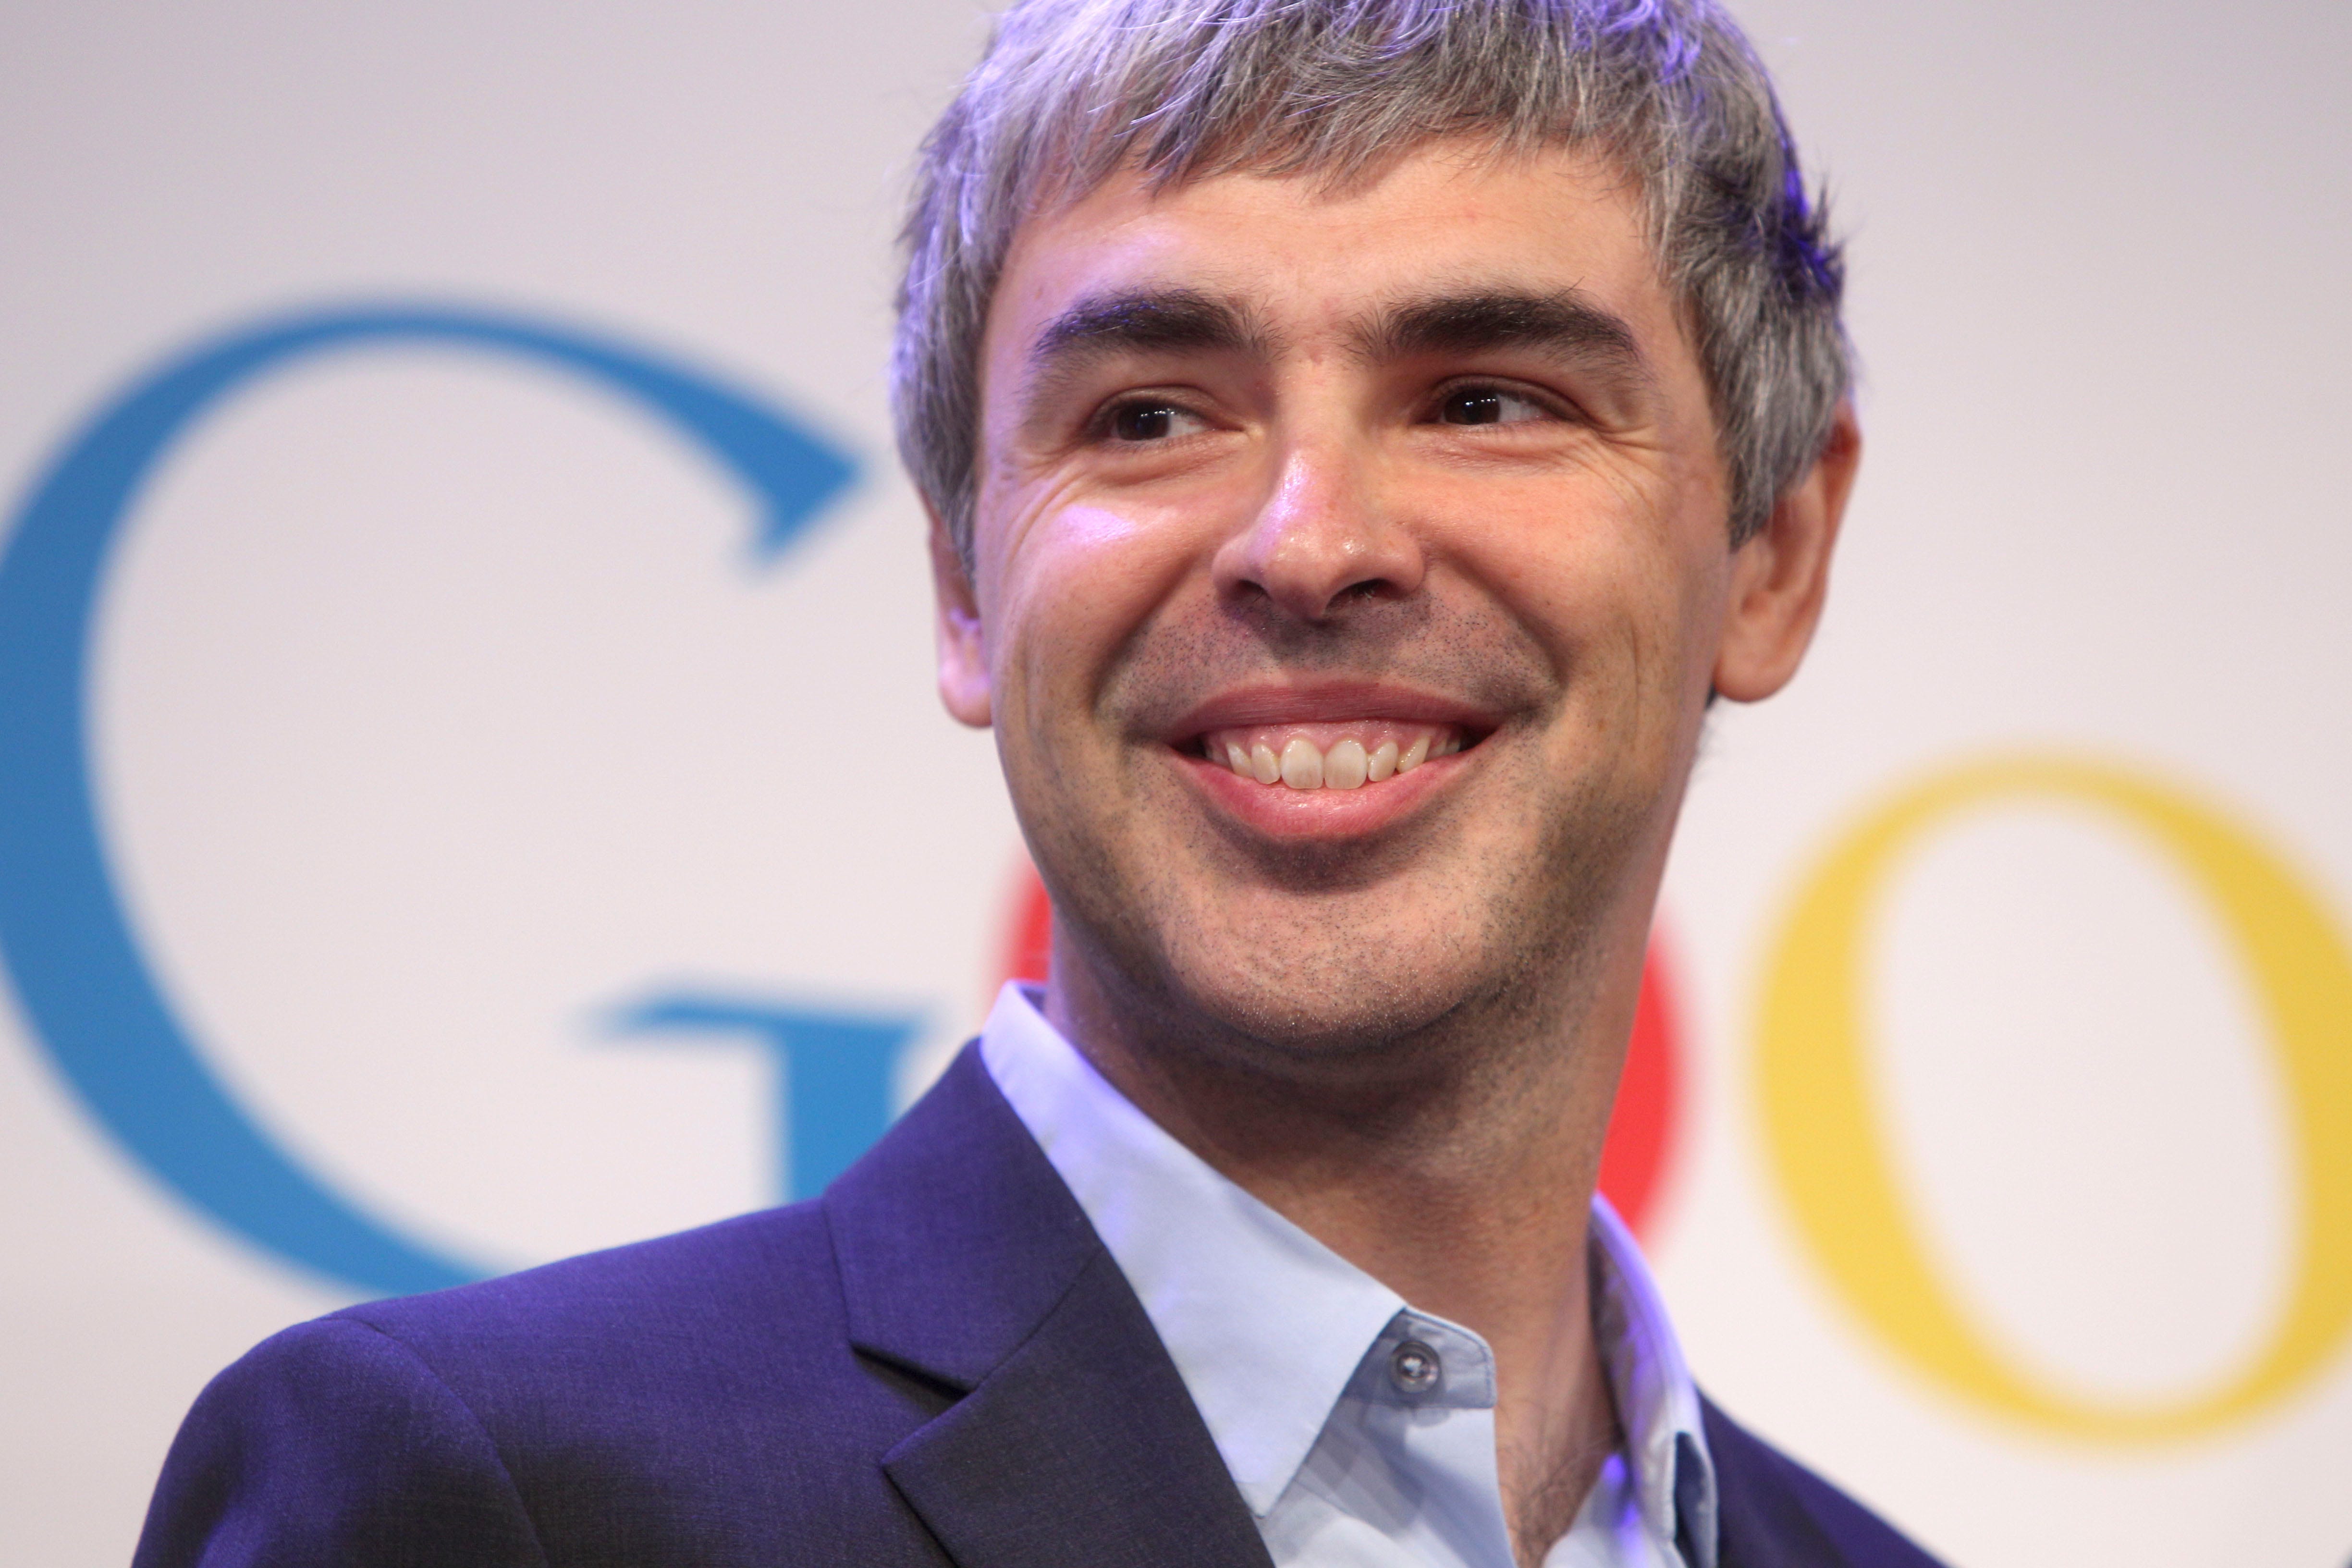 Der ehemalige Google-Chef Larry Page lächelt vor dem Google-Logo.